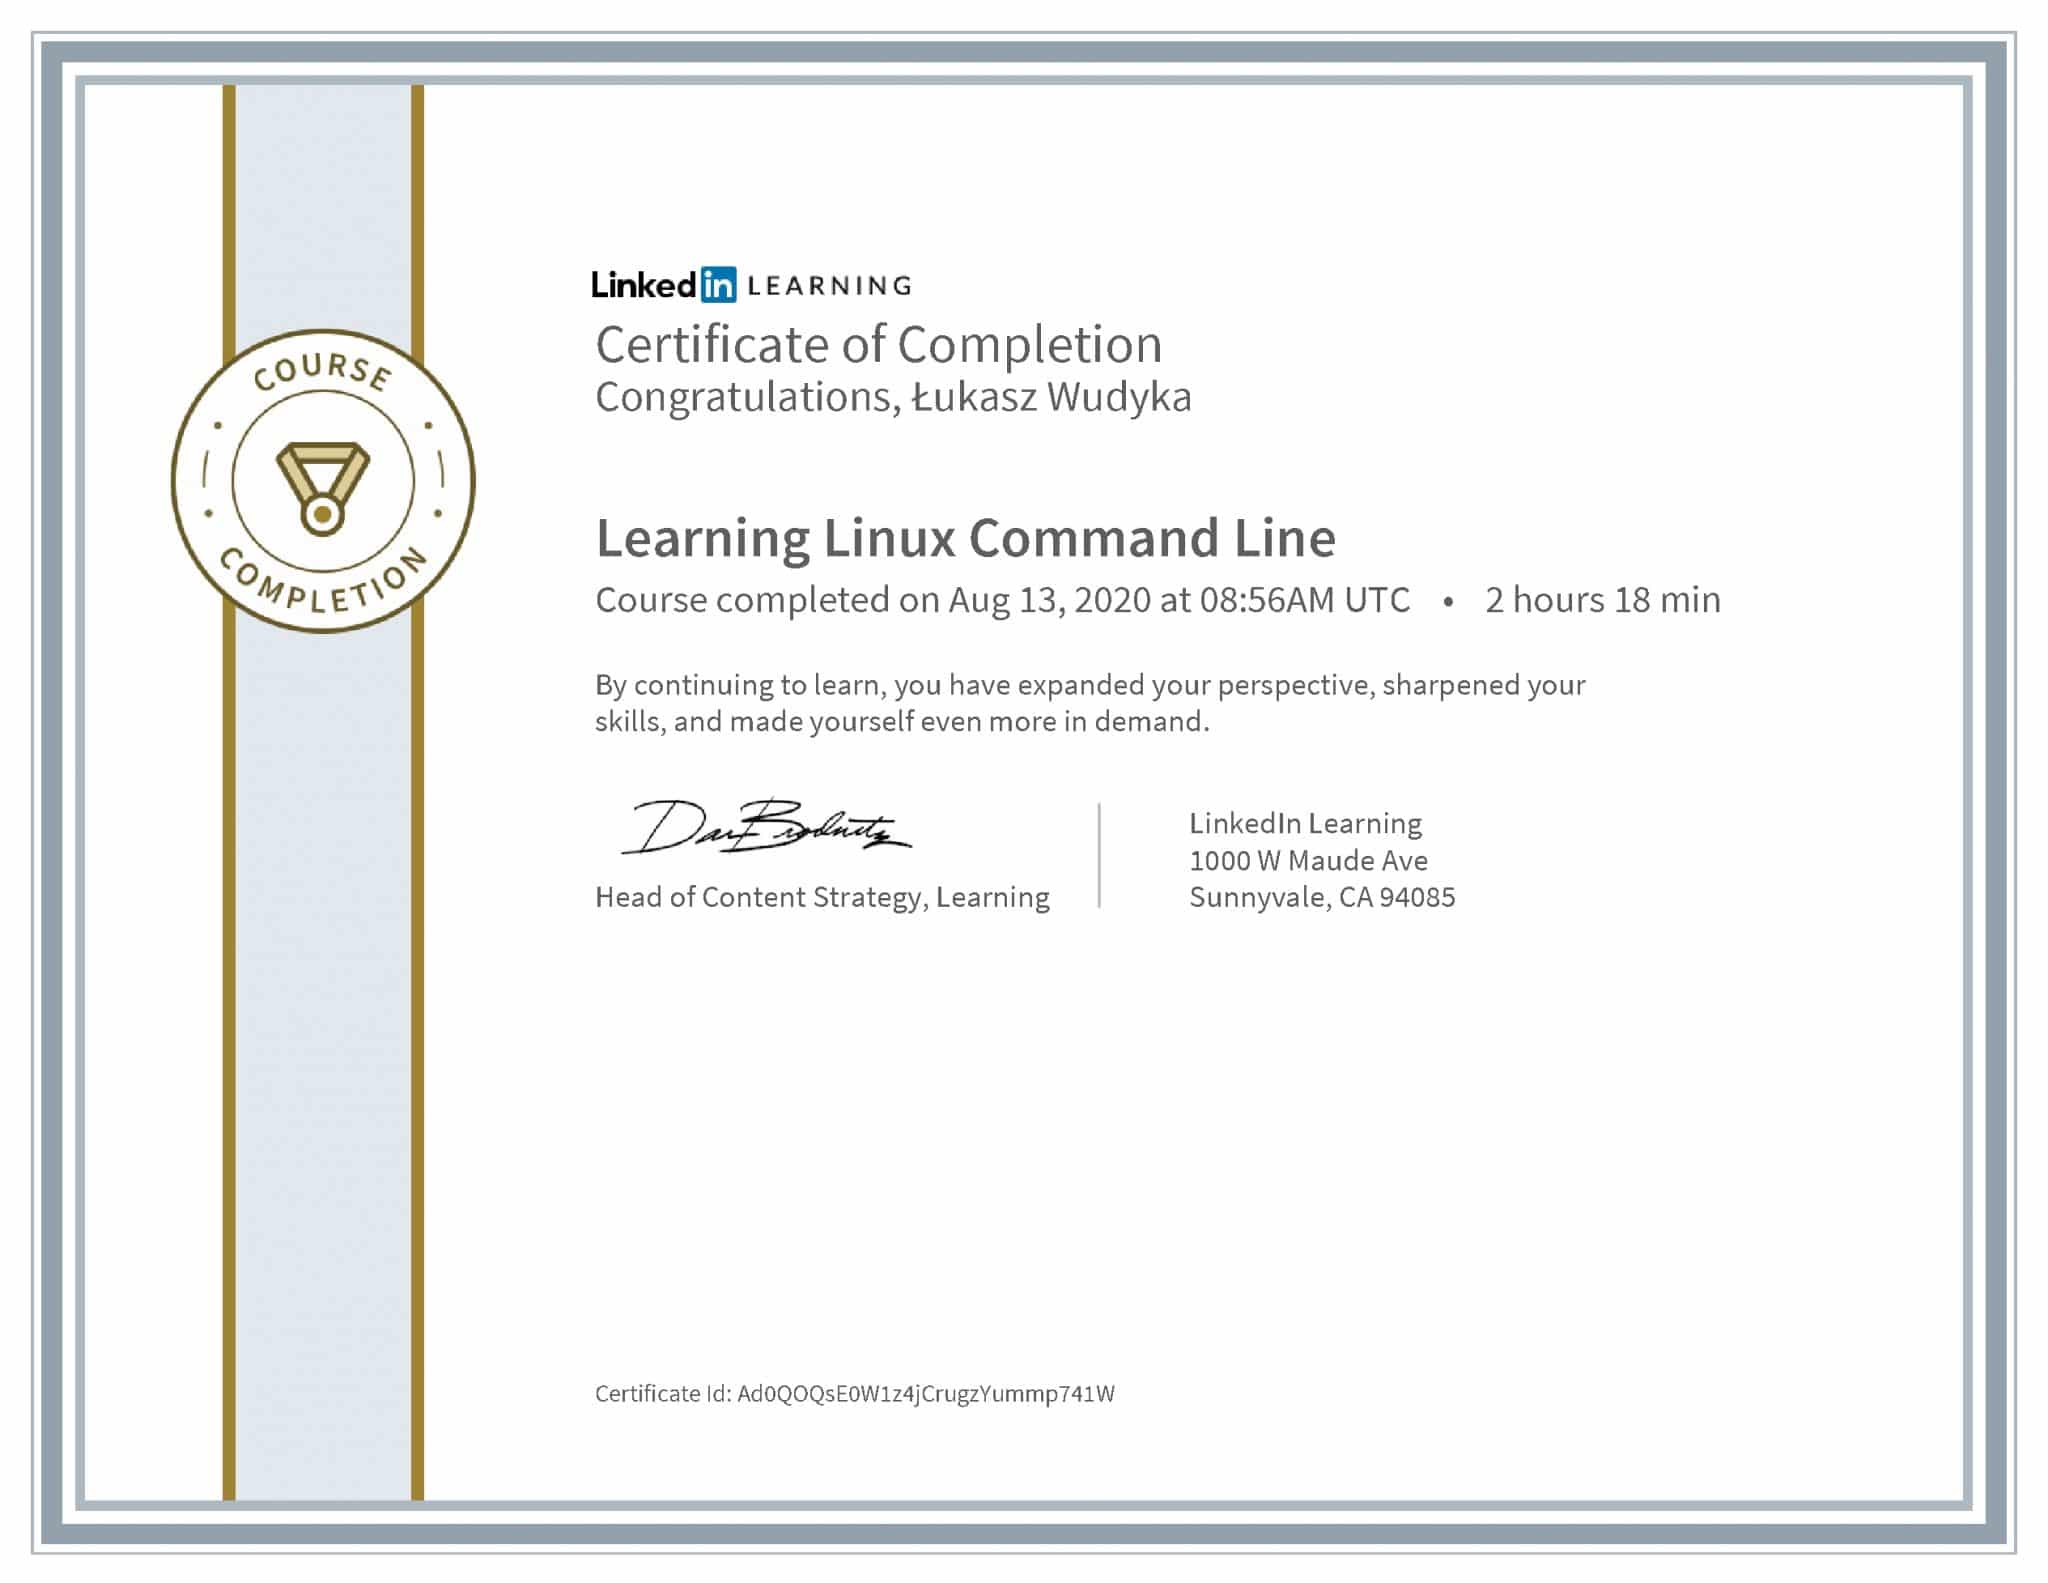 Łukasz Wudyka certyfikat LinkedIn Learning Linux Command Line